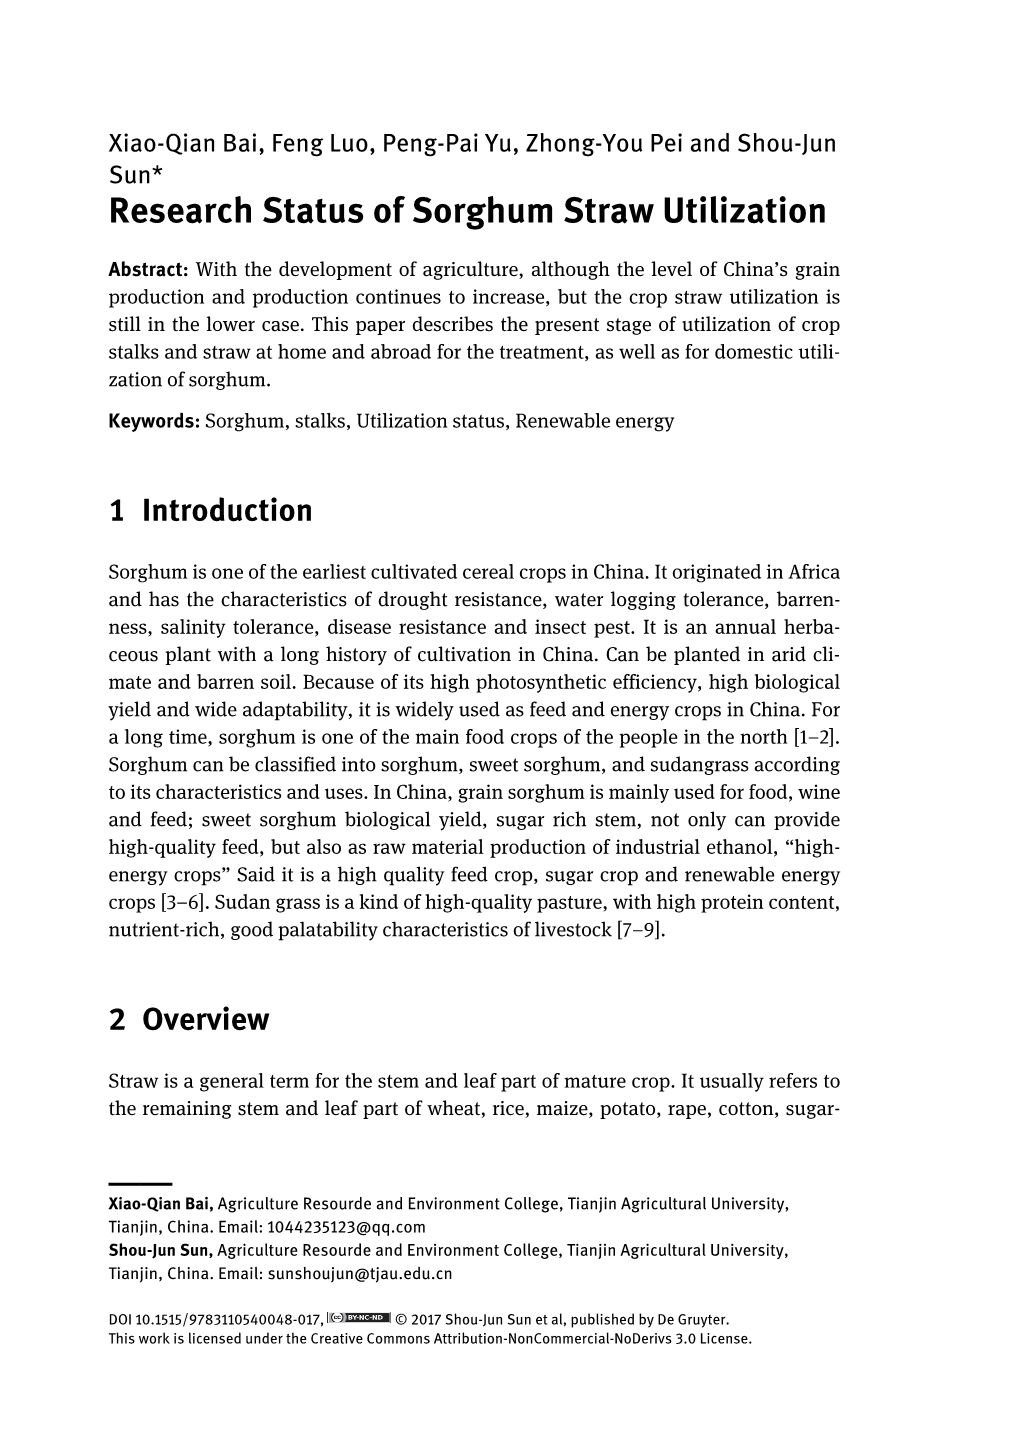 Research Status of Sorghum Straw Utilization